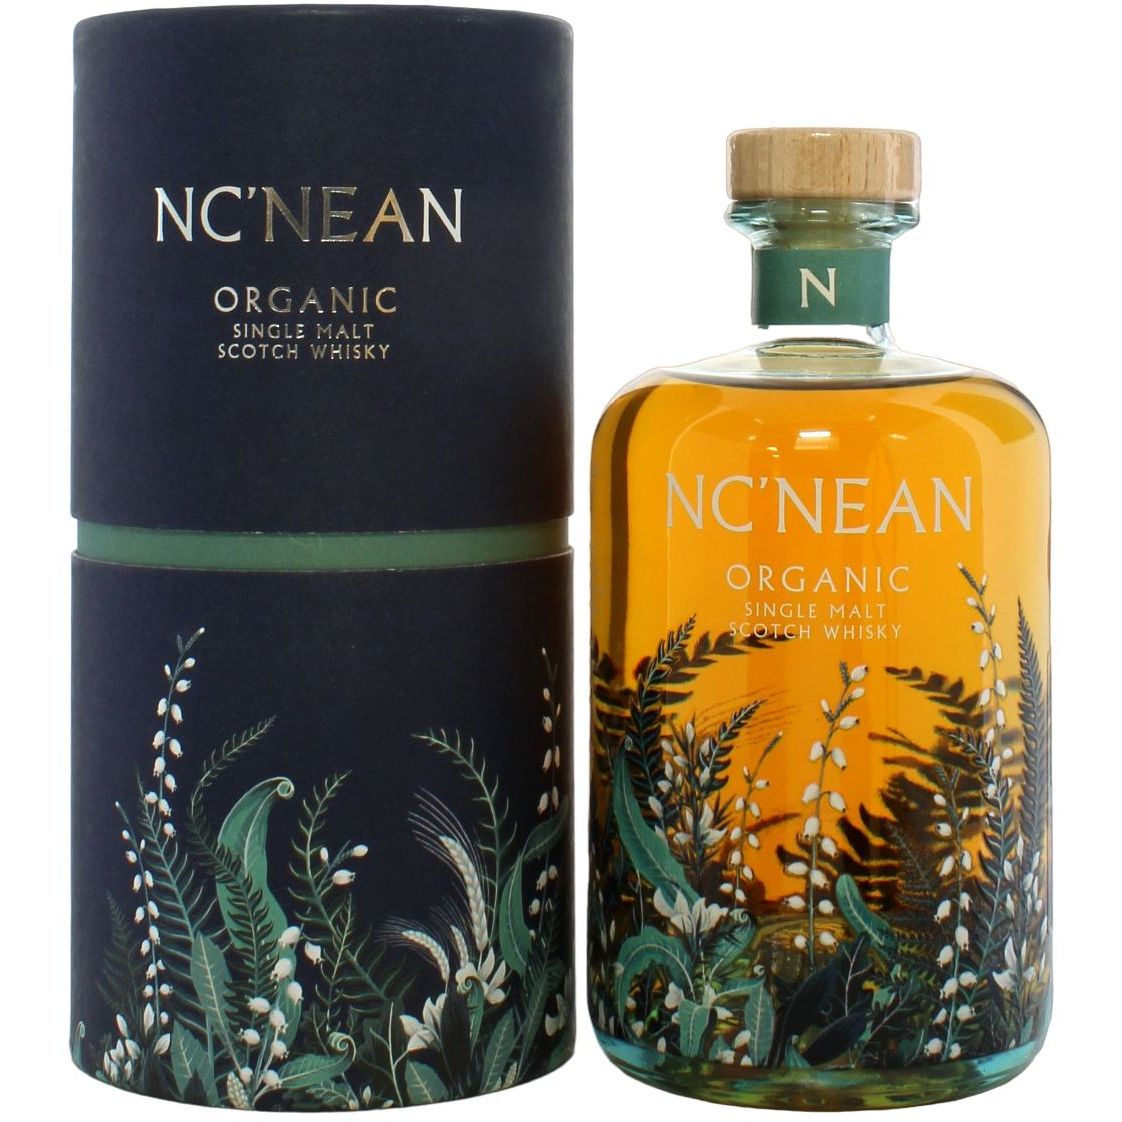 Виски Nc'nean Organic Single Malt Scotch Whisky 46% 0.7 л, в подарочной упаковке - фото 1